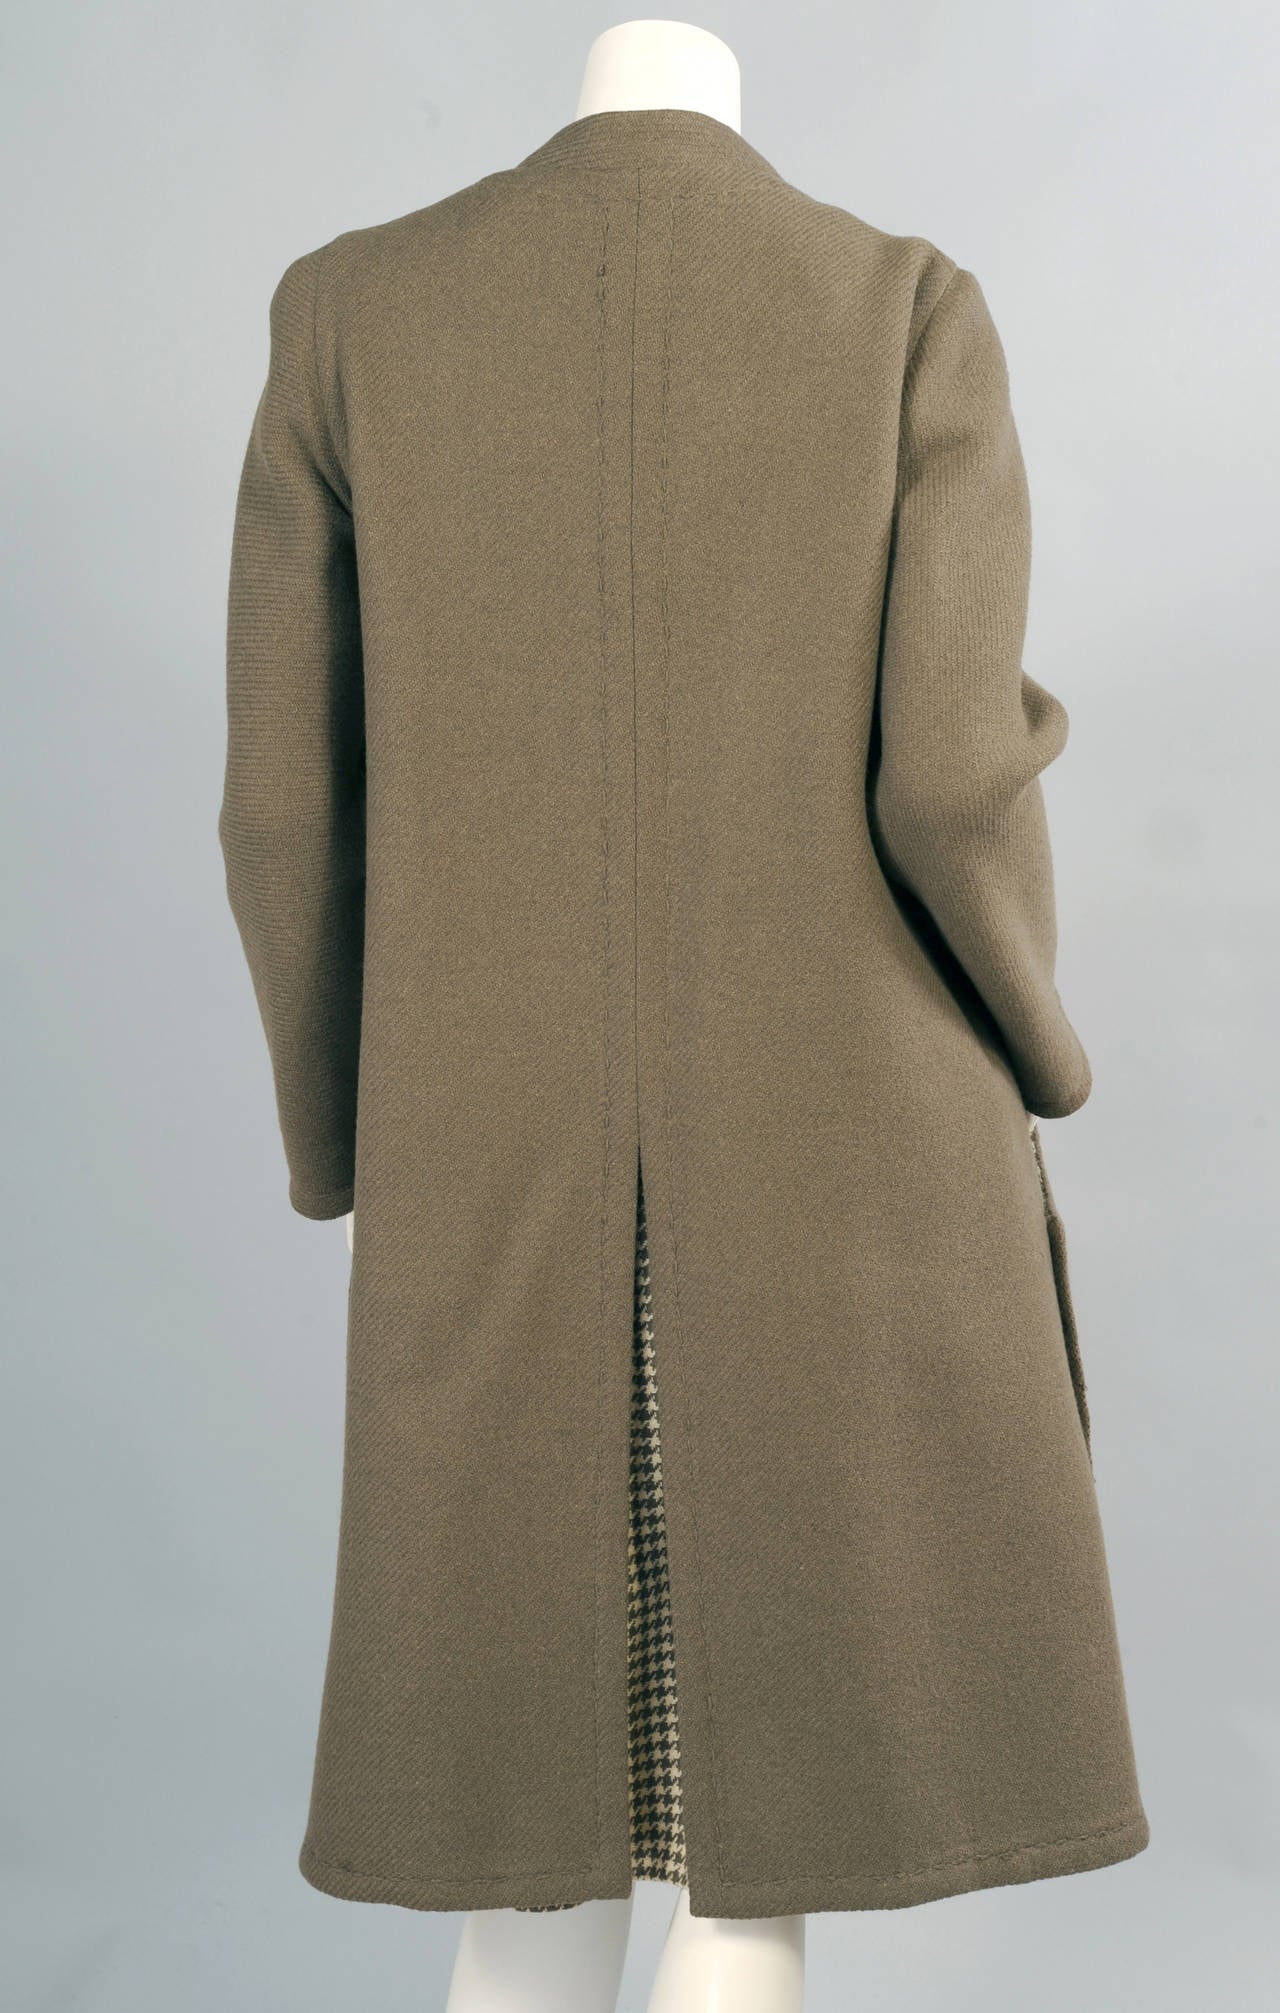 dress and matching coat